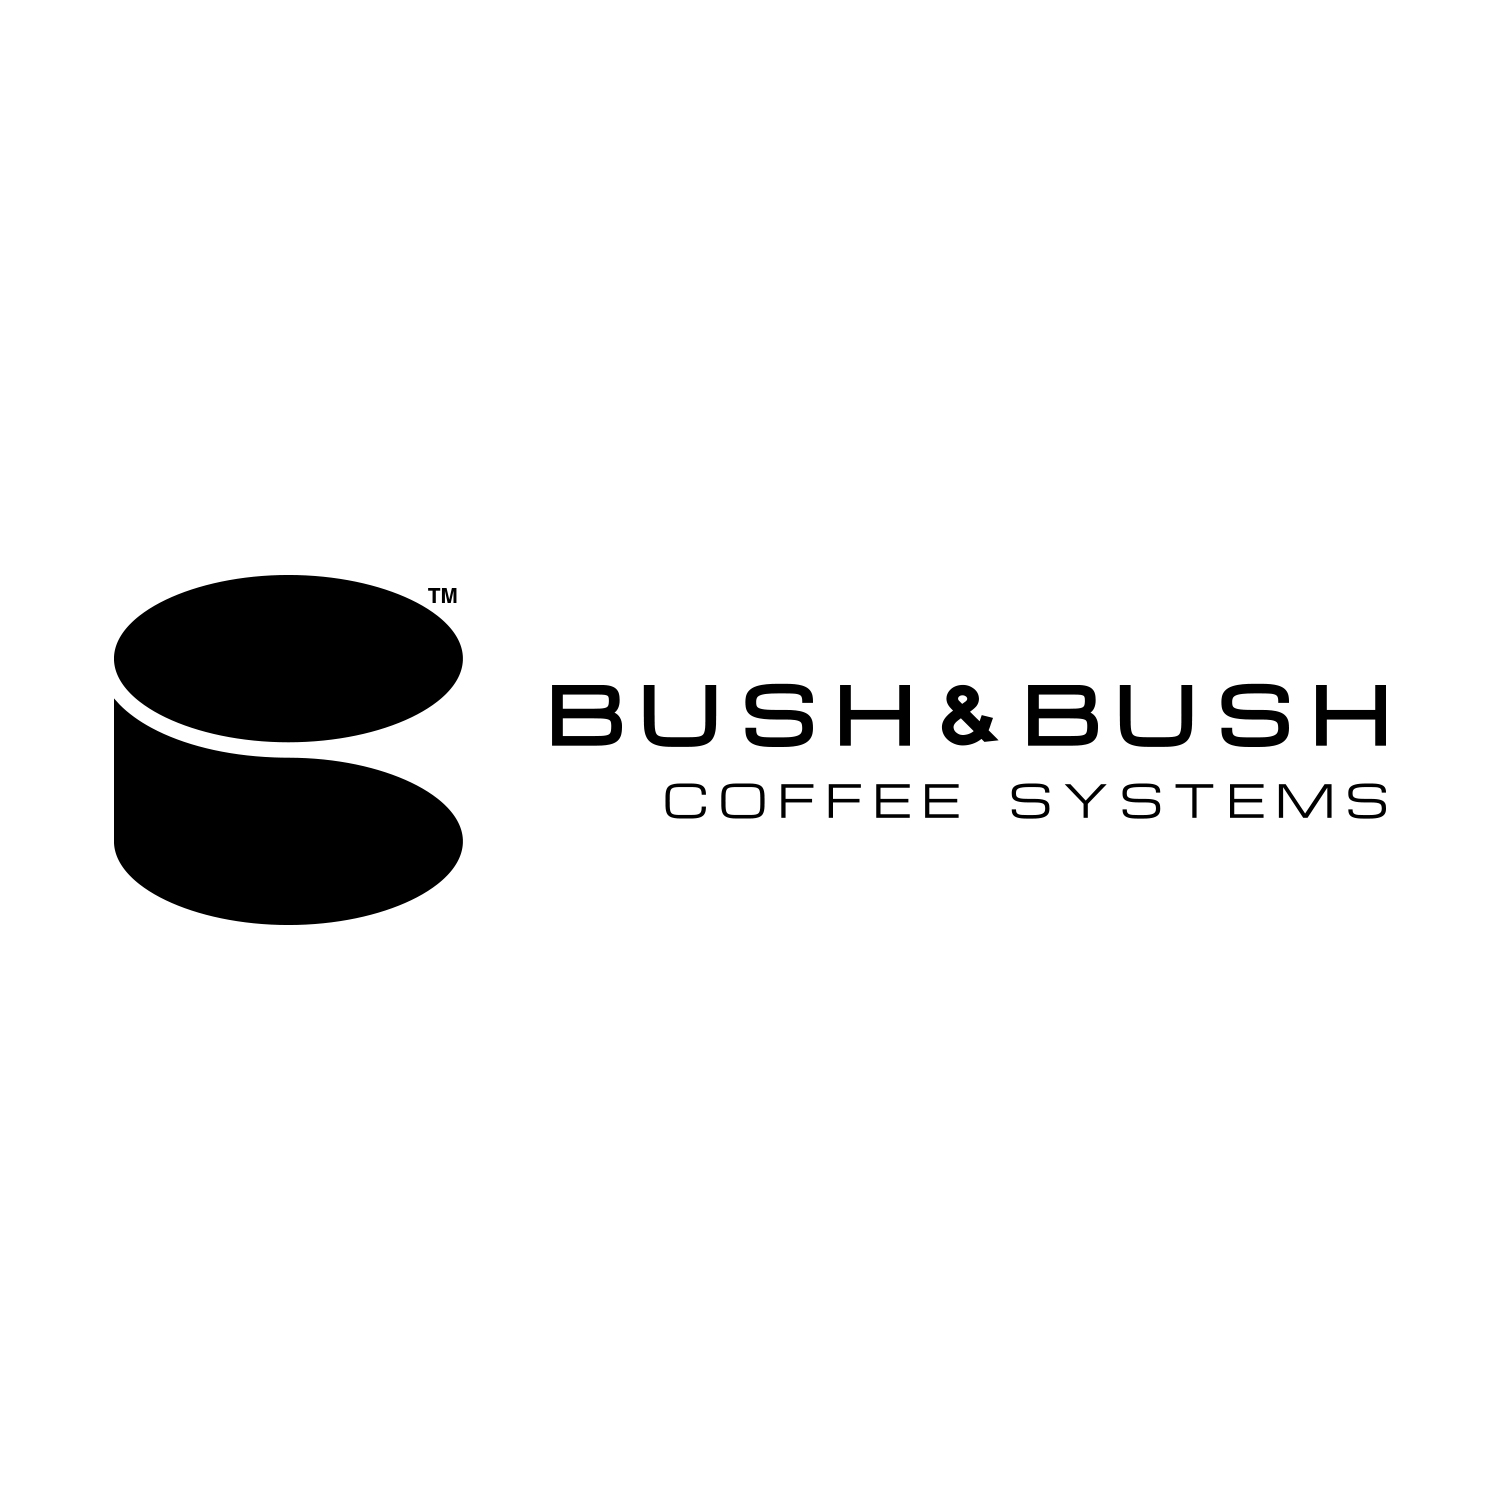 Bush & Bush